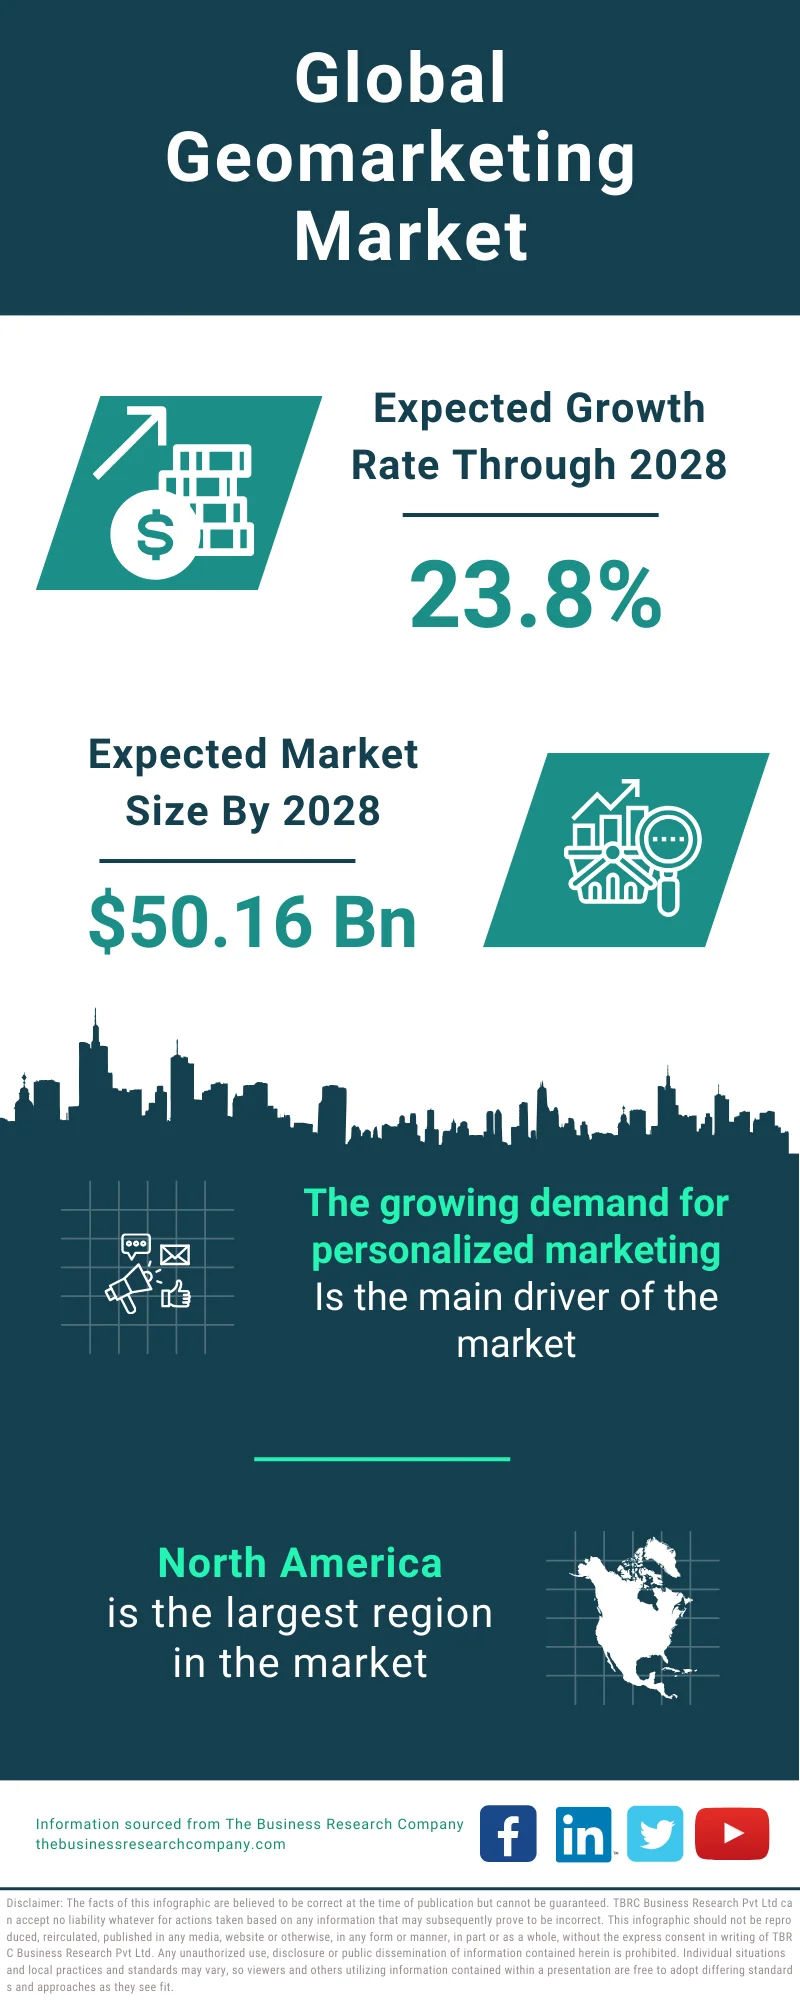 Geomarketing Global Market Report 2024 